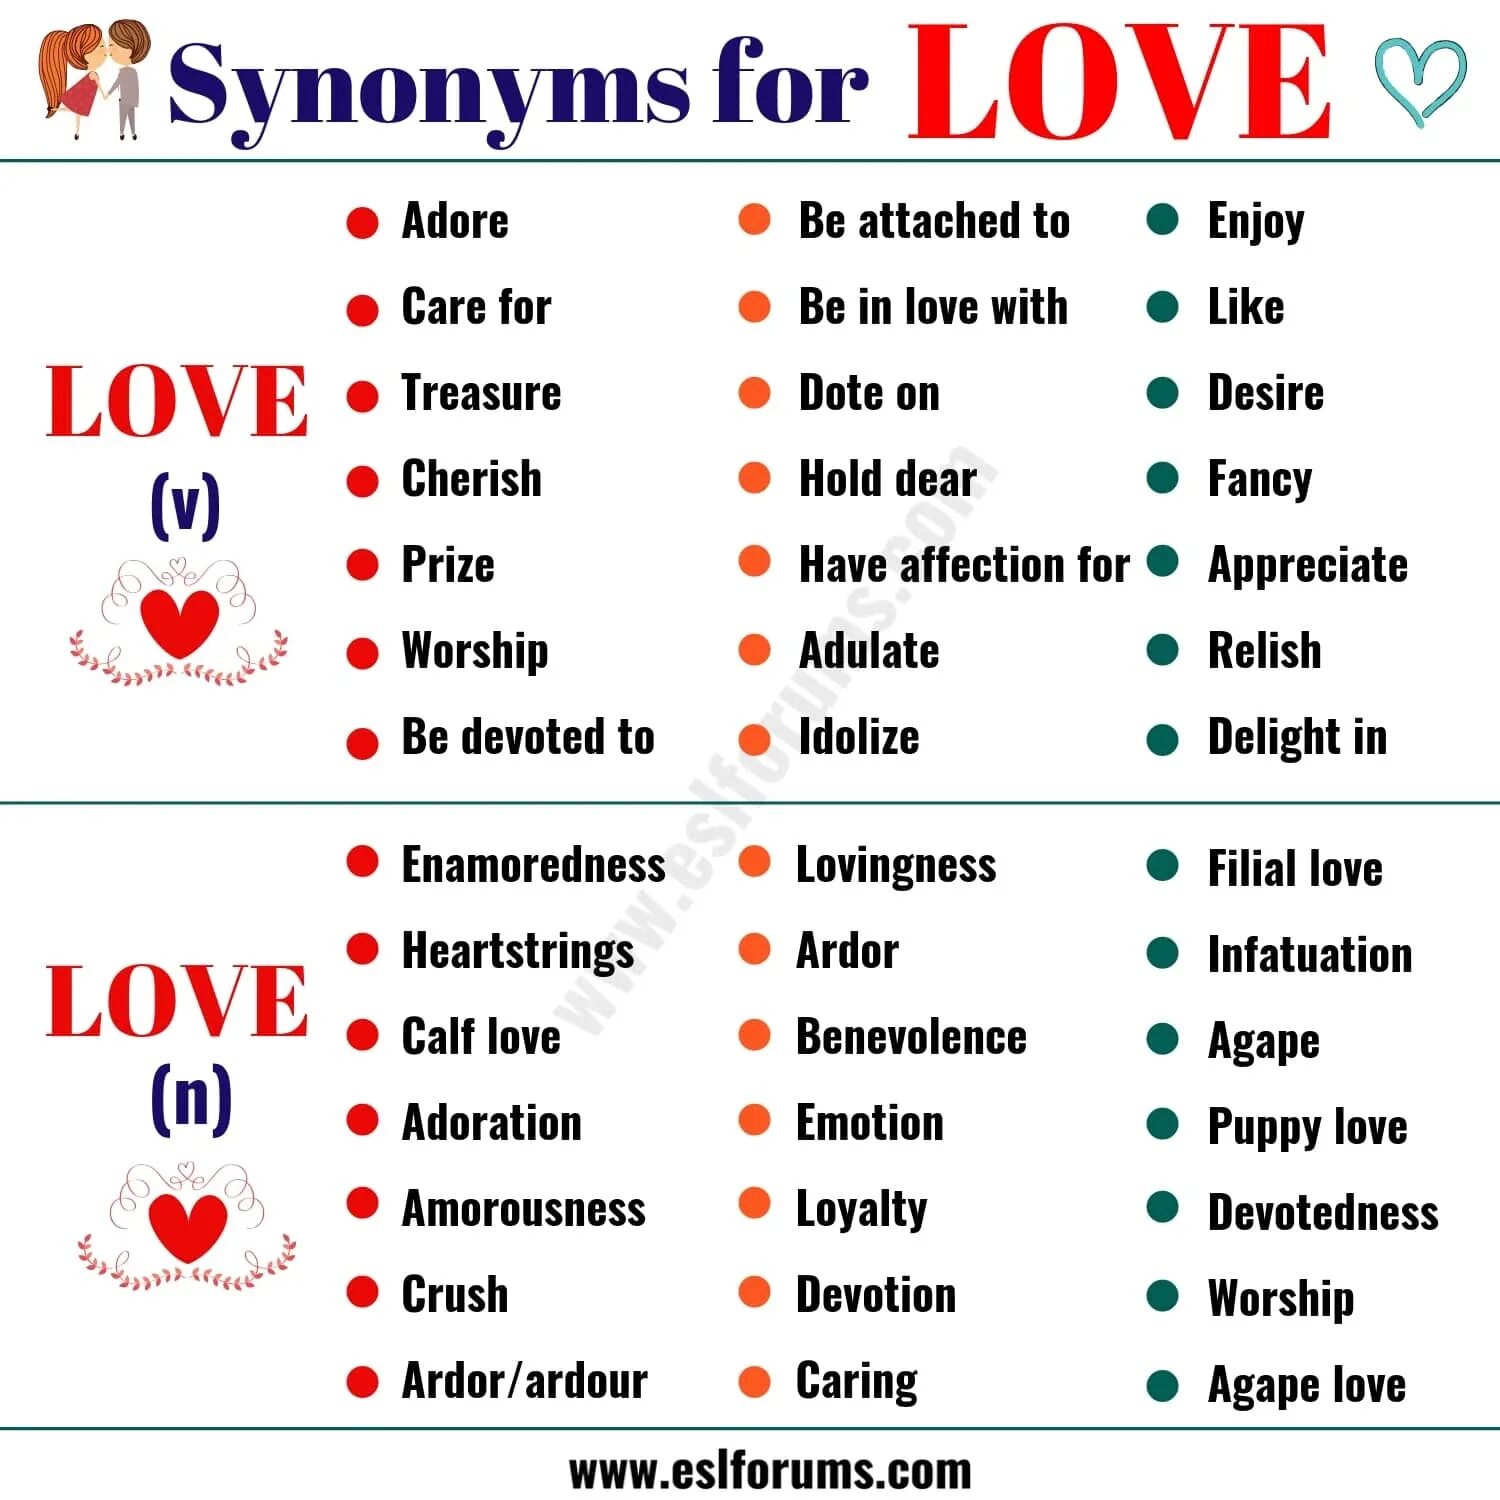 Interest synonyms. Love синонимы. Синонимы к слову Love на английском. Love синонимы на английском. I like синонимы на английском.